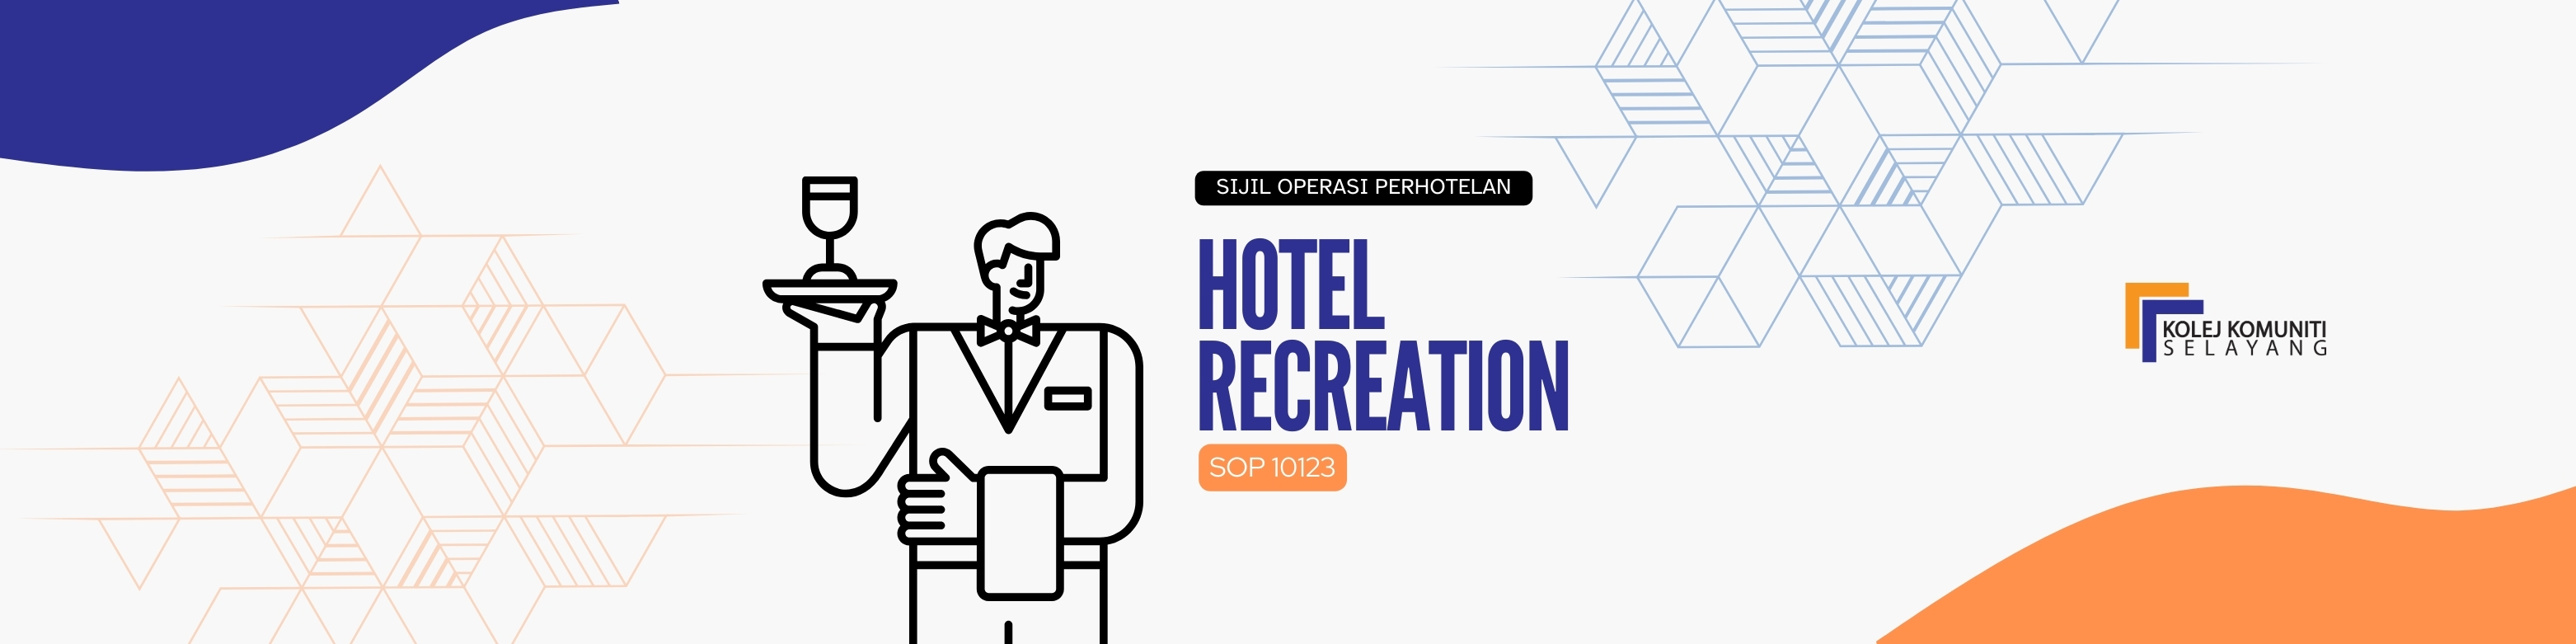 SOP10123 - HOTEL RECREATION 